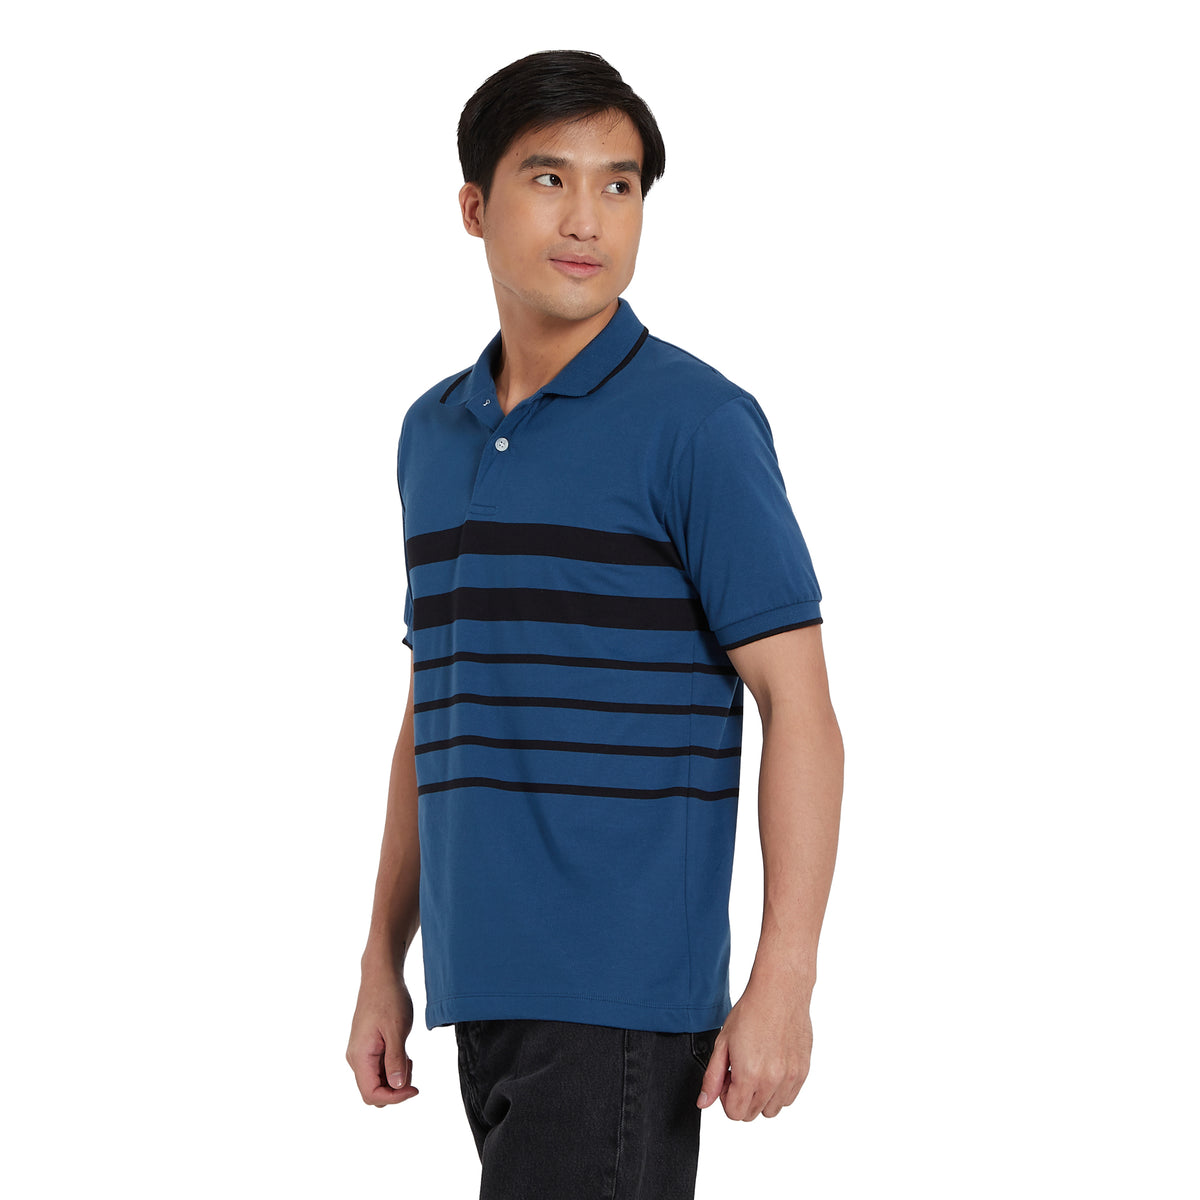 Cubic Mens Stripes  Polo Shirt Polo-shirt Collar Top Top for Men - CMS2317C